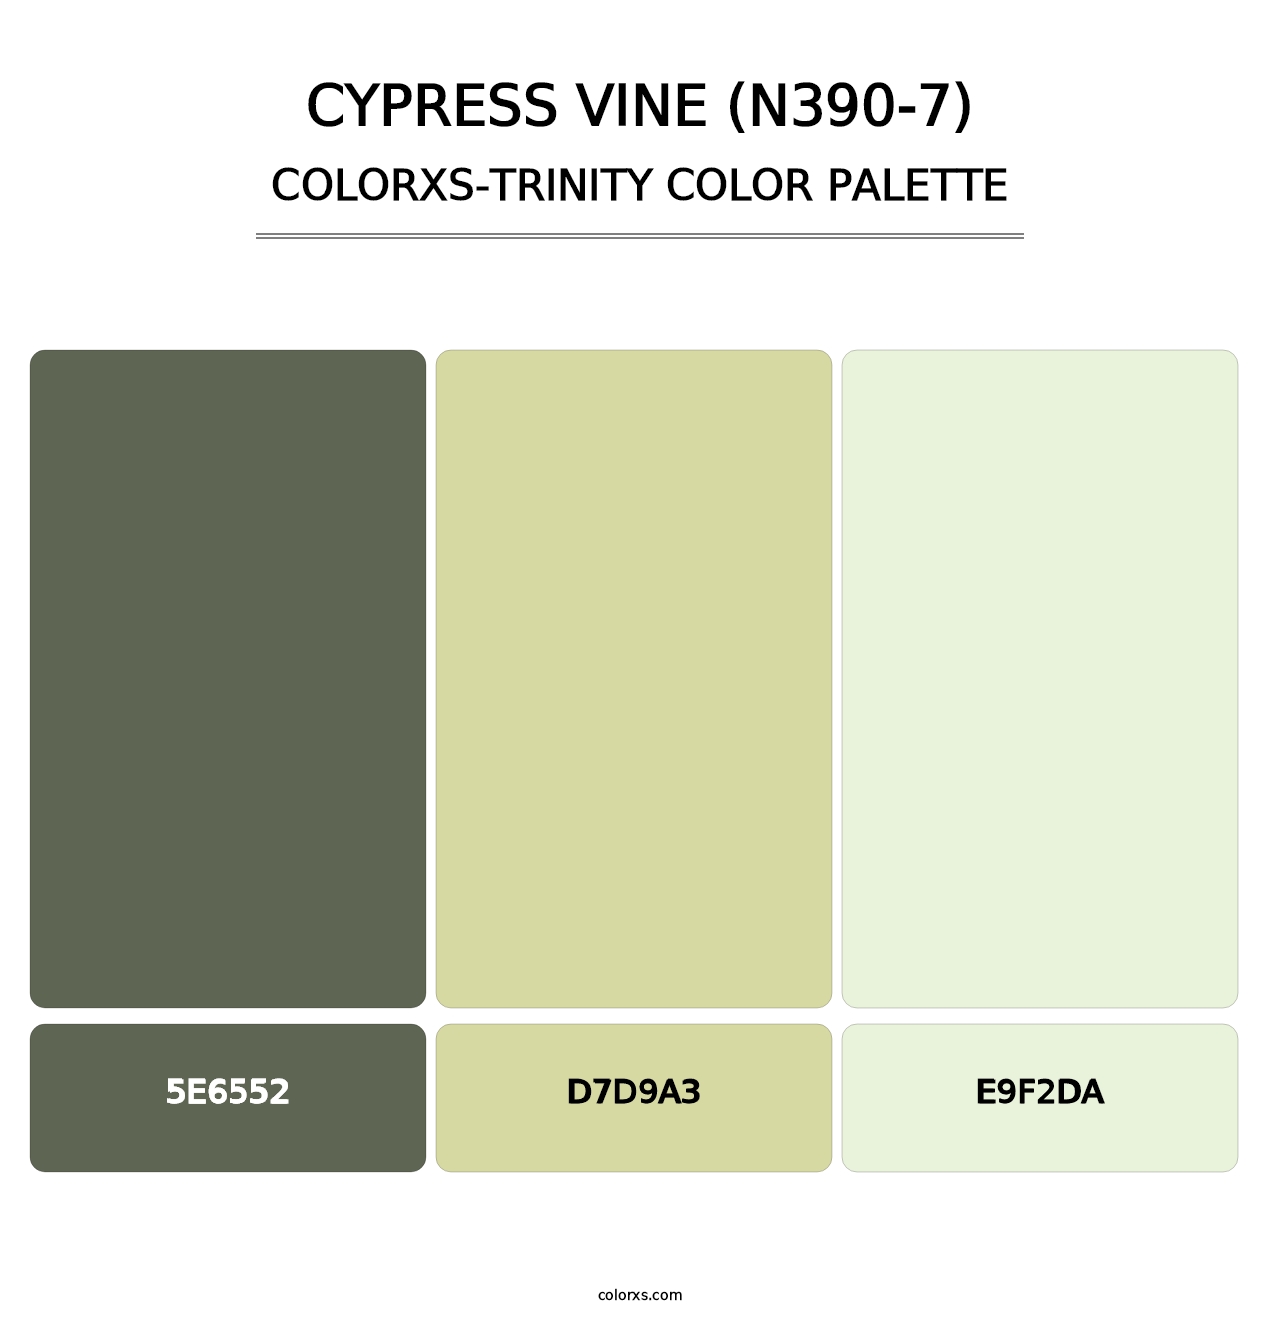 Cypress Vine (N390-7) - Colorxs Trinity Palette